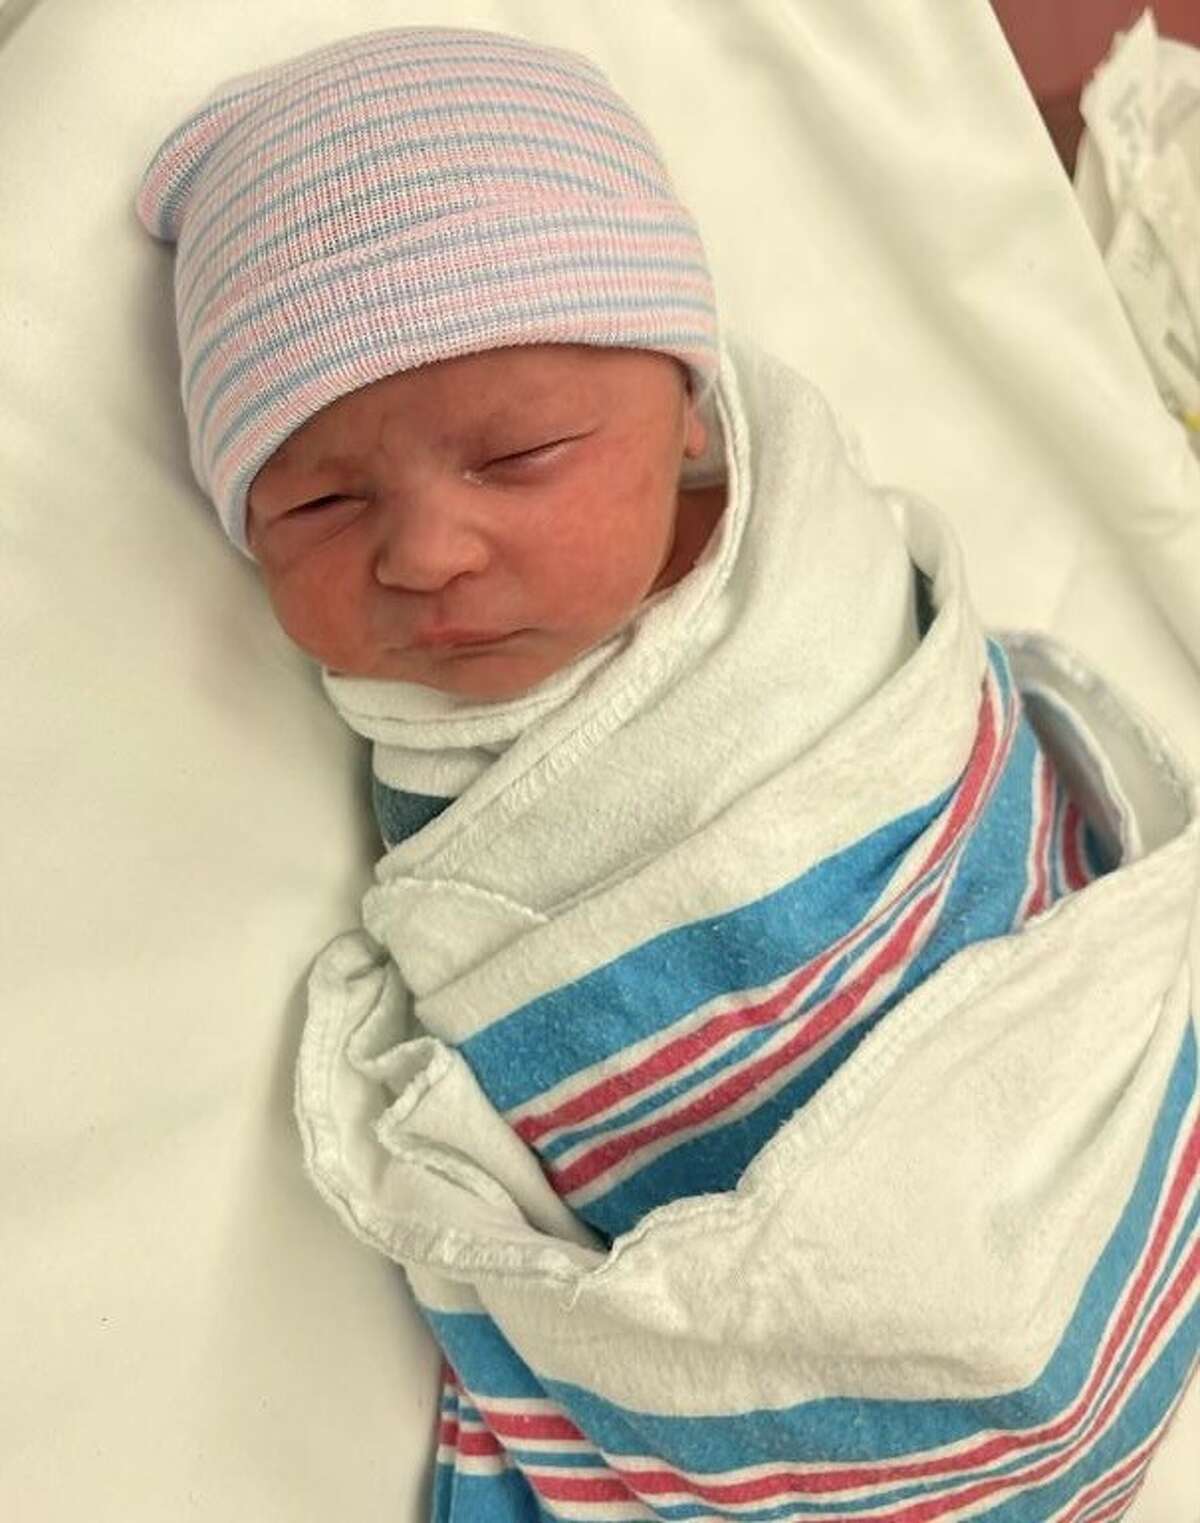 Naomi became the 2023 New Year Baby at Laredo Medical Center.